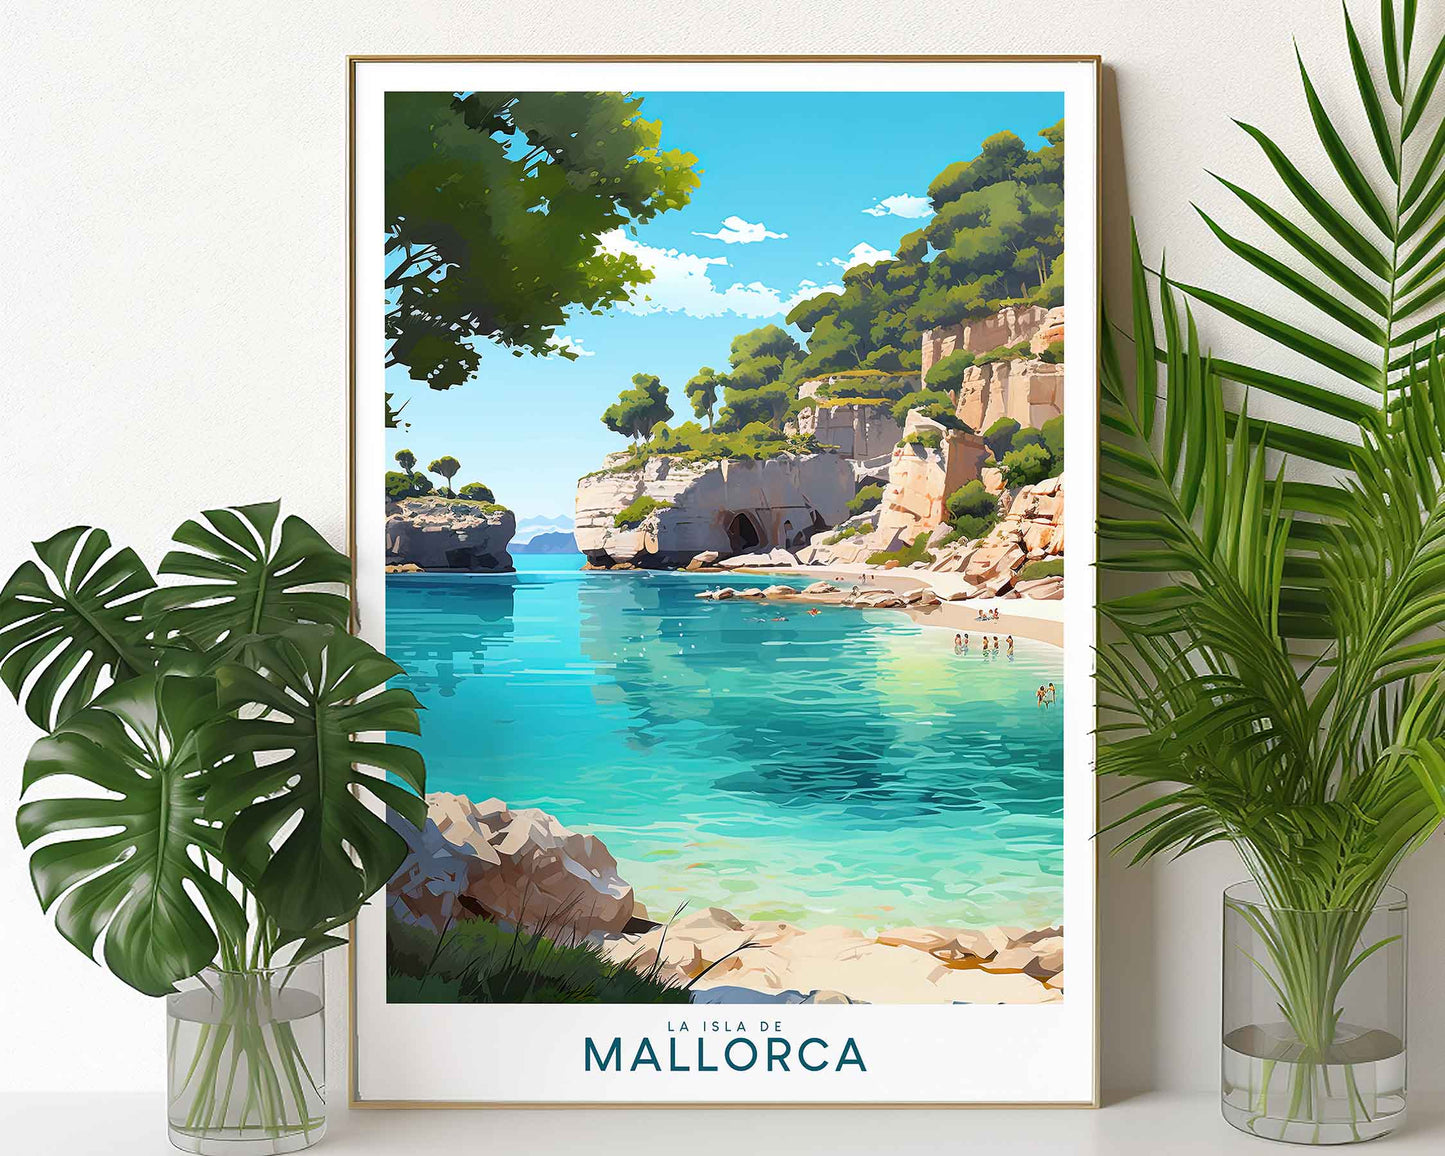 Framed Image of Mallorca Spain Travel Poster Prints Illustration Wall Art